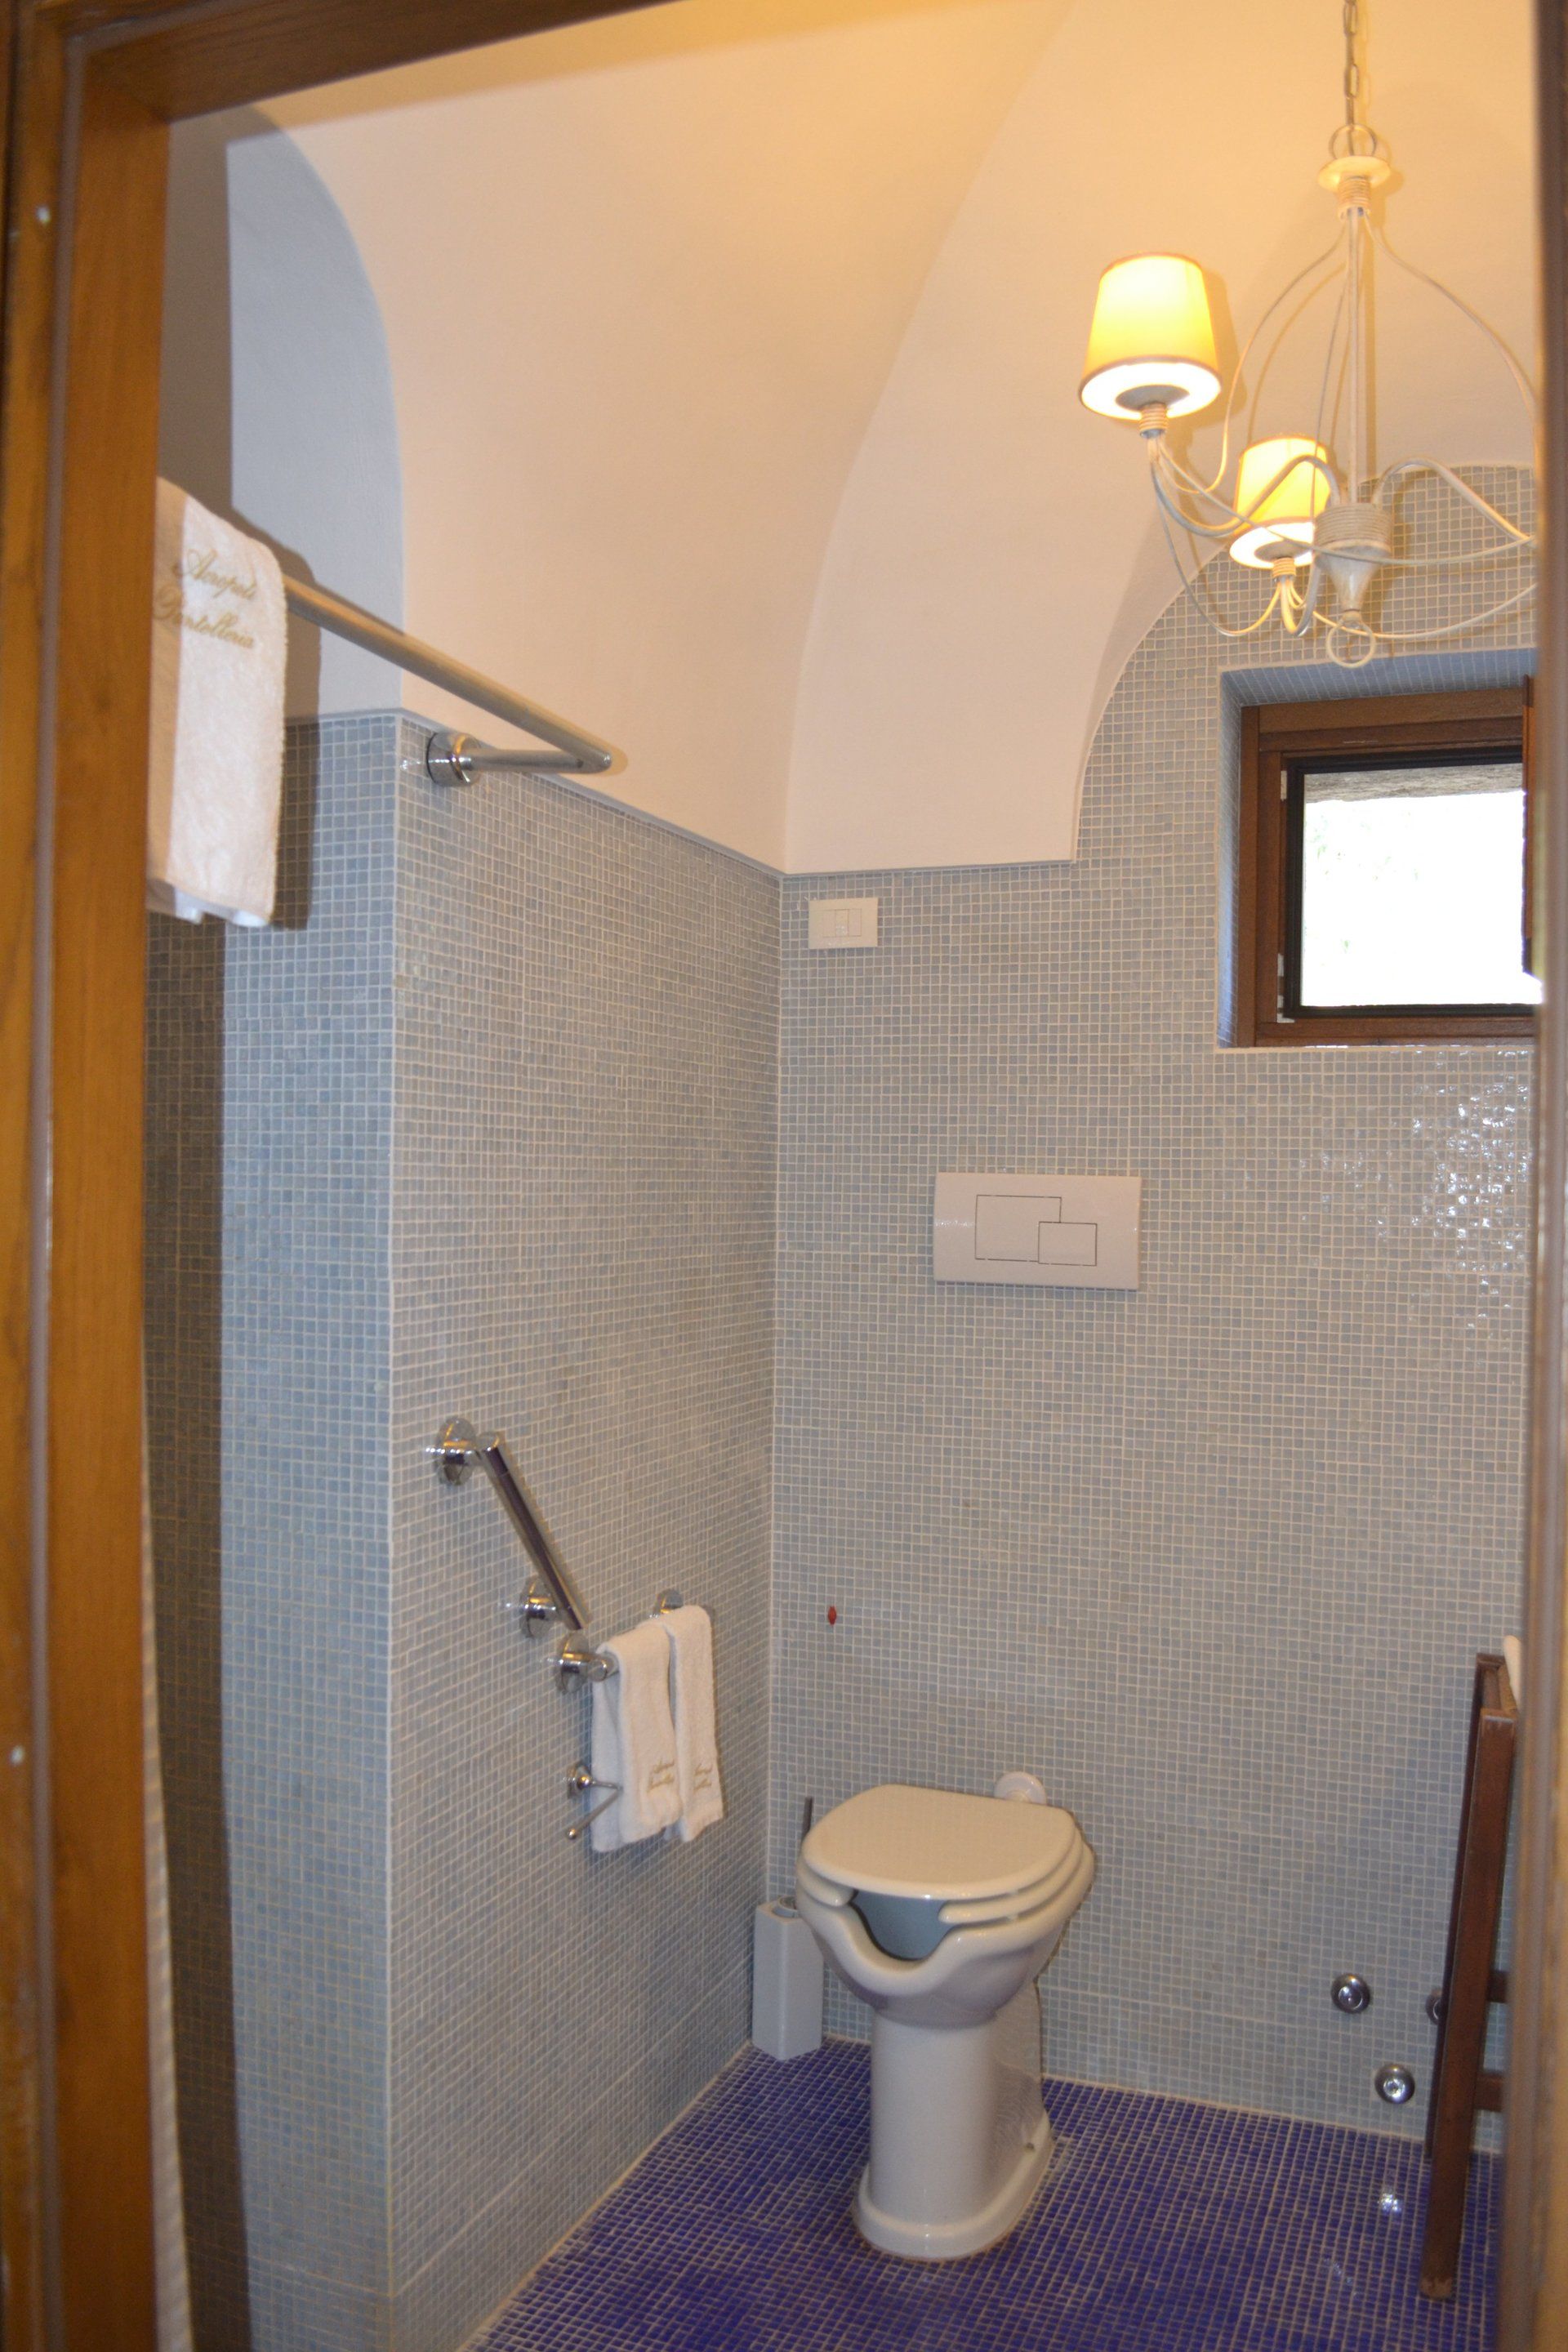 Salle de bain de la suite- dammuso turchese